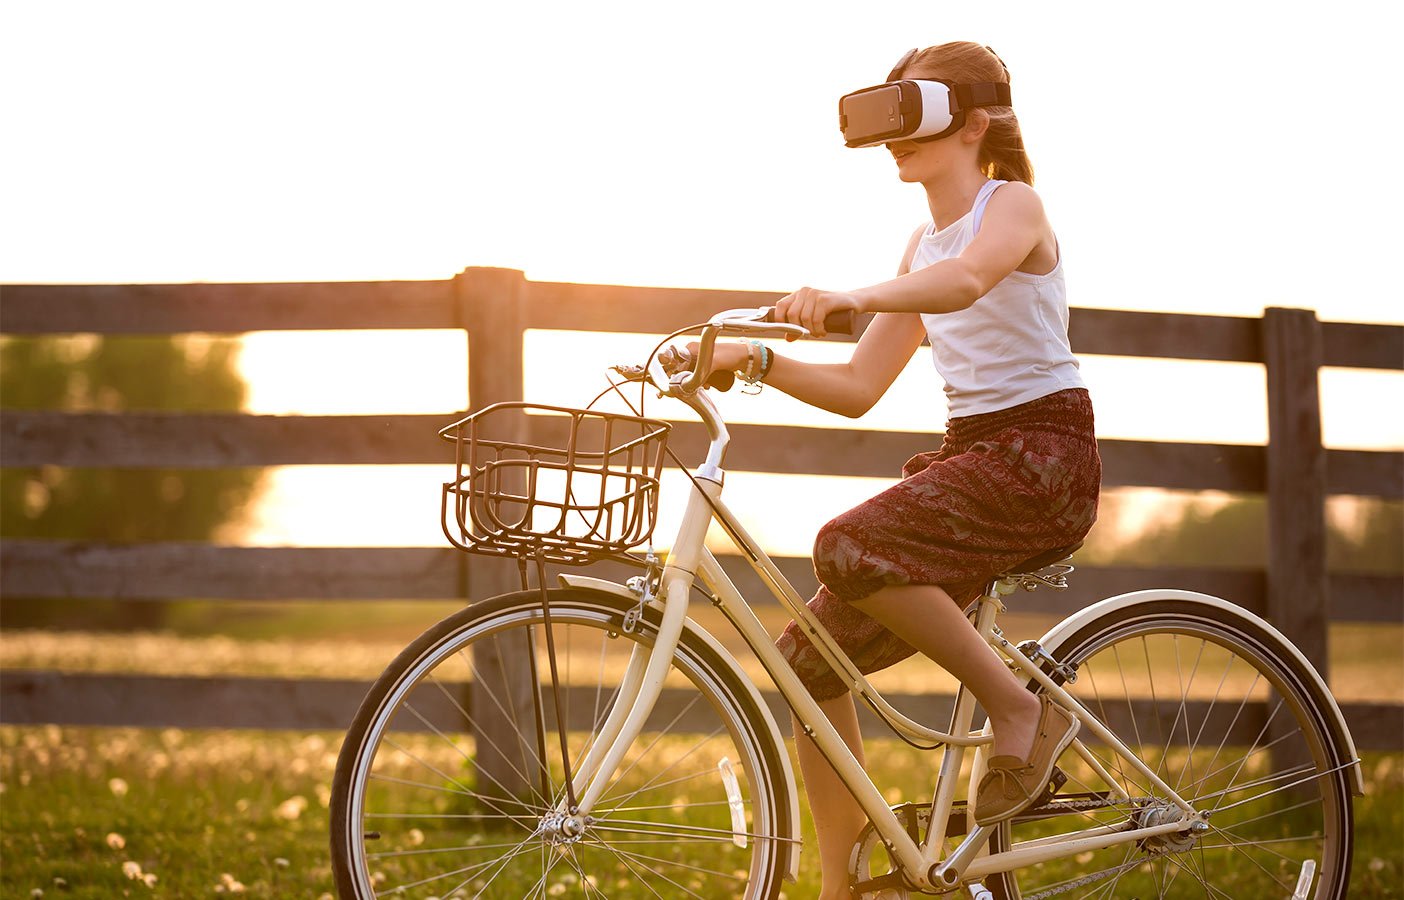 Kind mit Virtual-Reality-Brille fährt auf Fahrrad an Zaun entlang